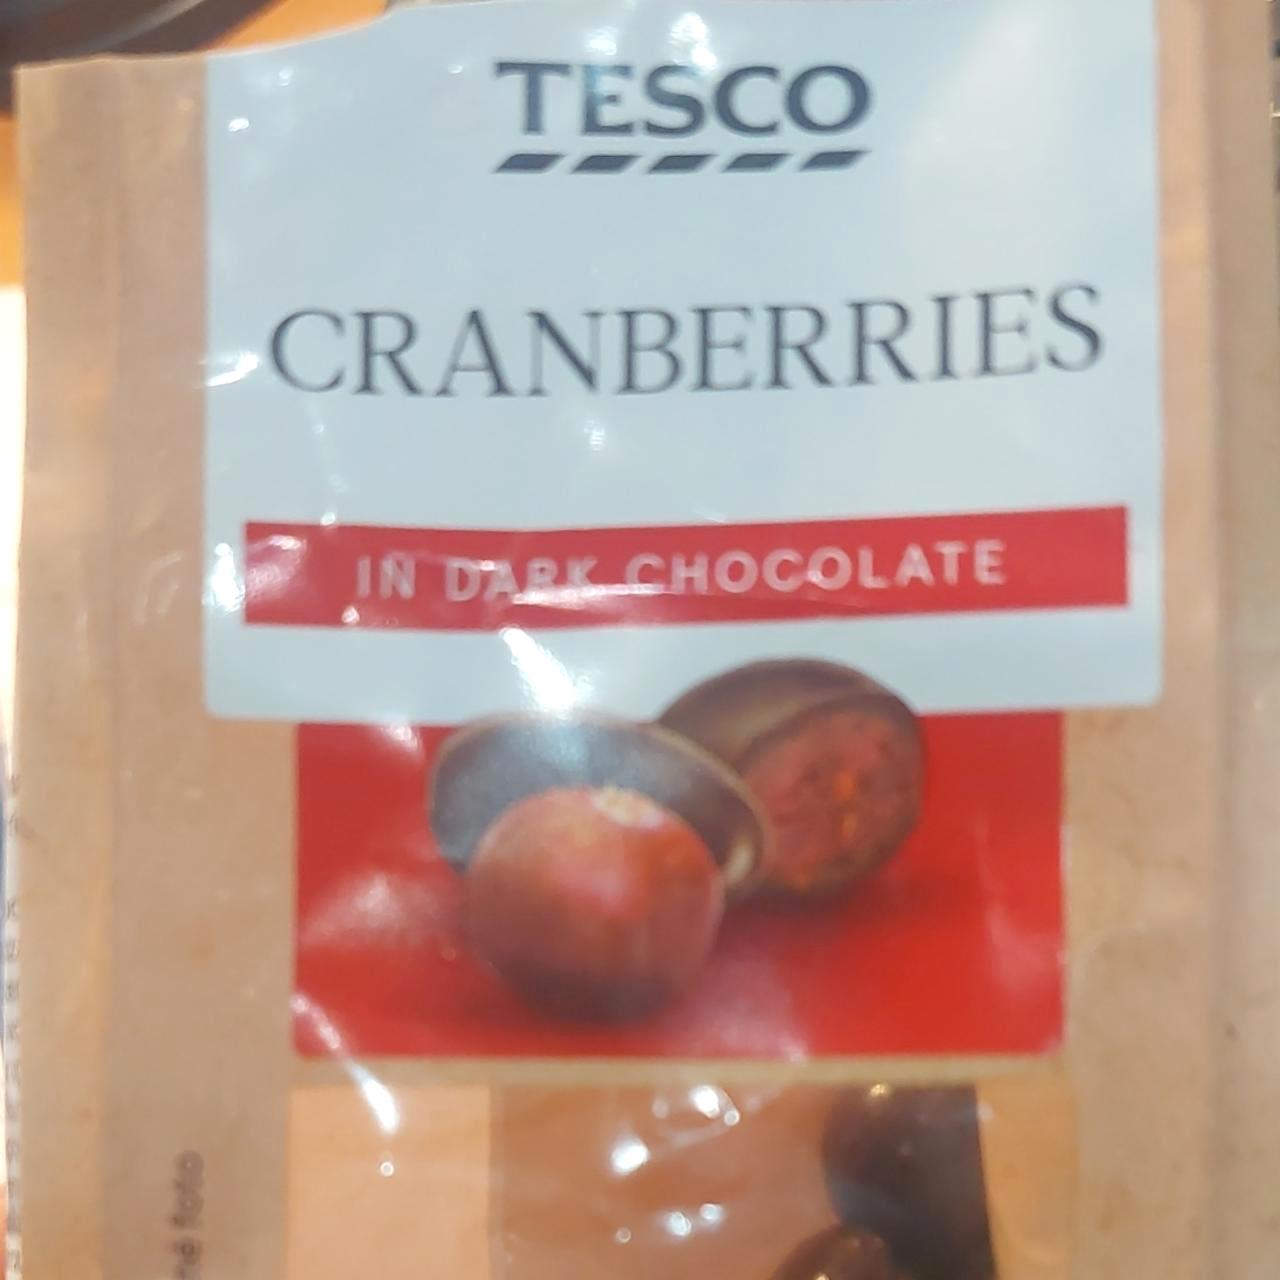 Képek - Cranberries in dark chocolate Tesco